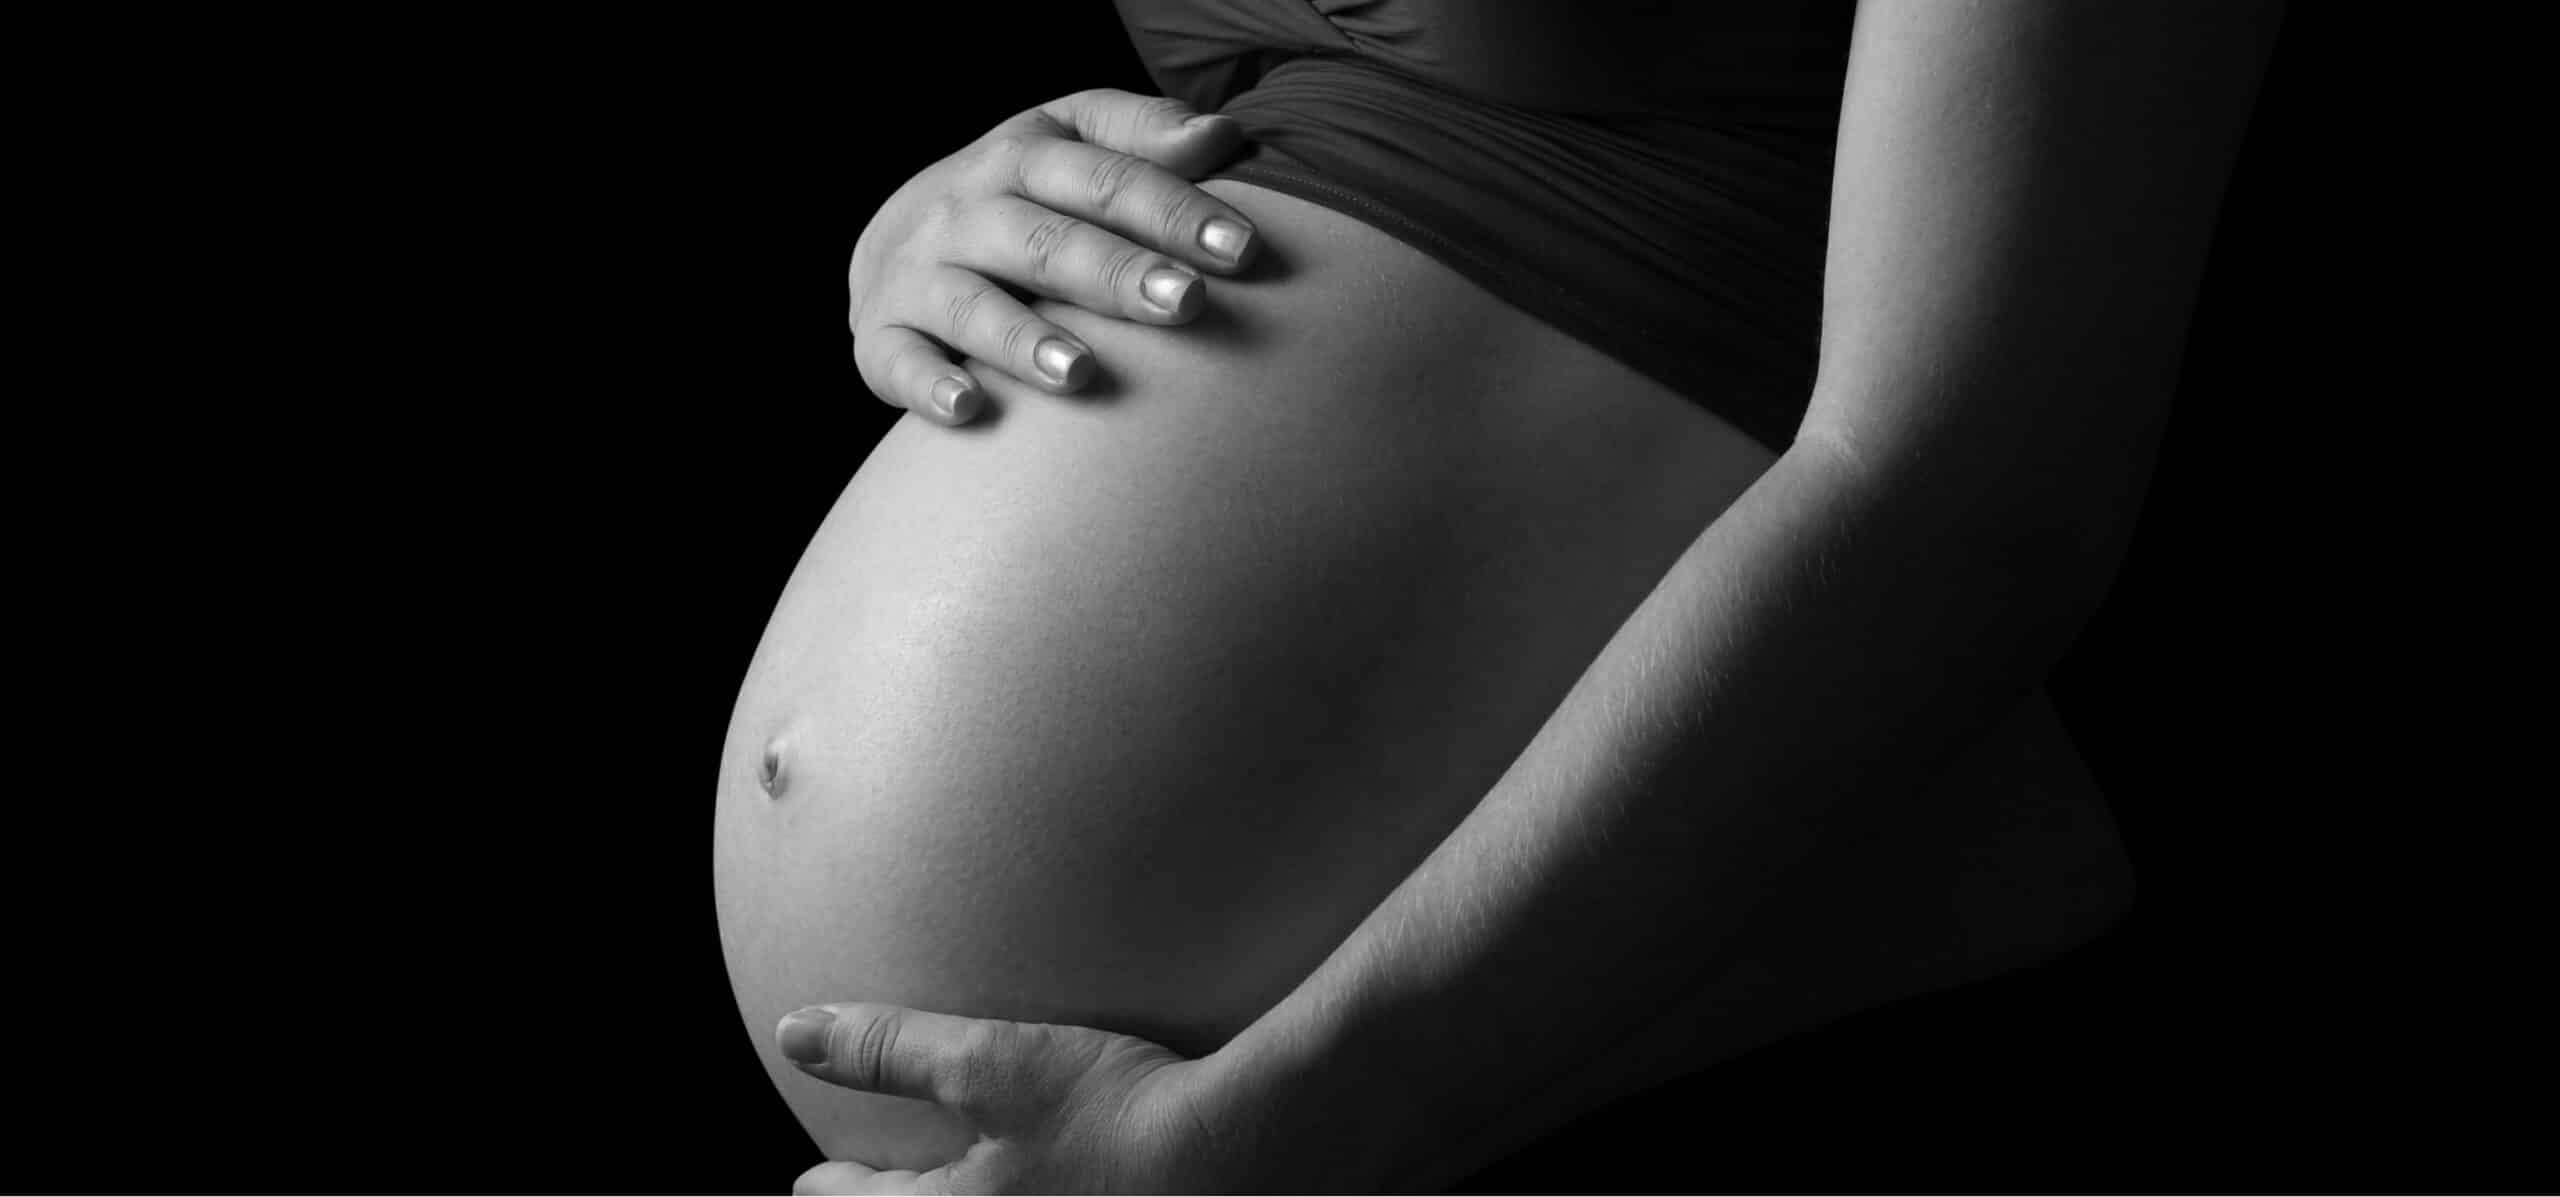 Augmentation mammaire et grossesse | chirurgie mammaire | Strasbourg | Drs Bollecker et Himy